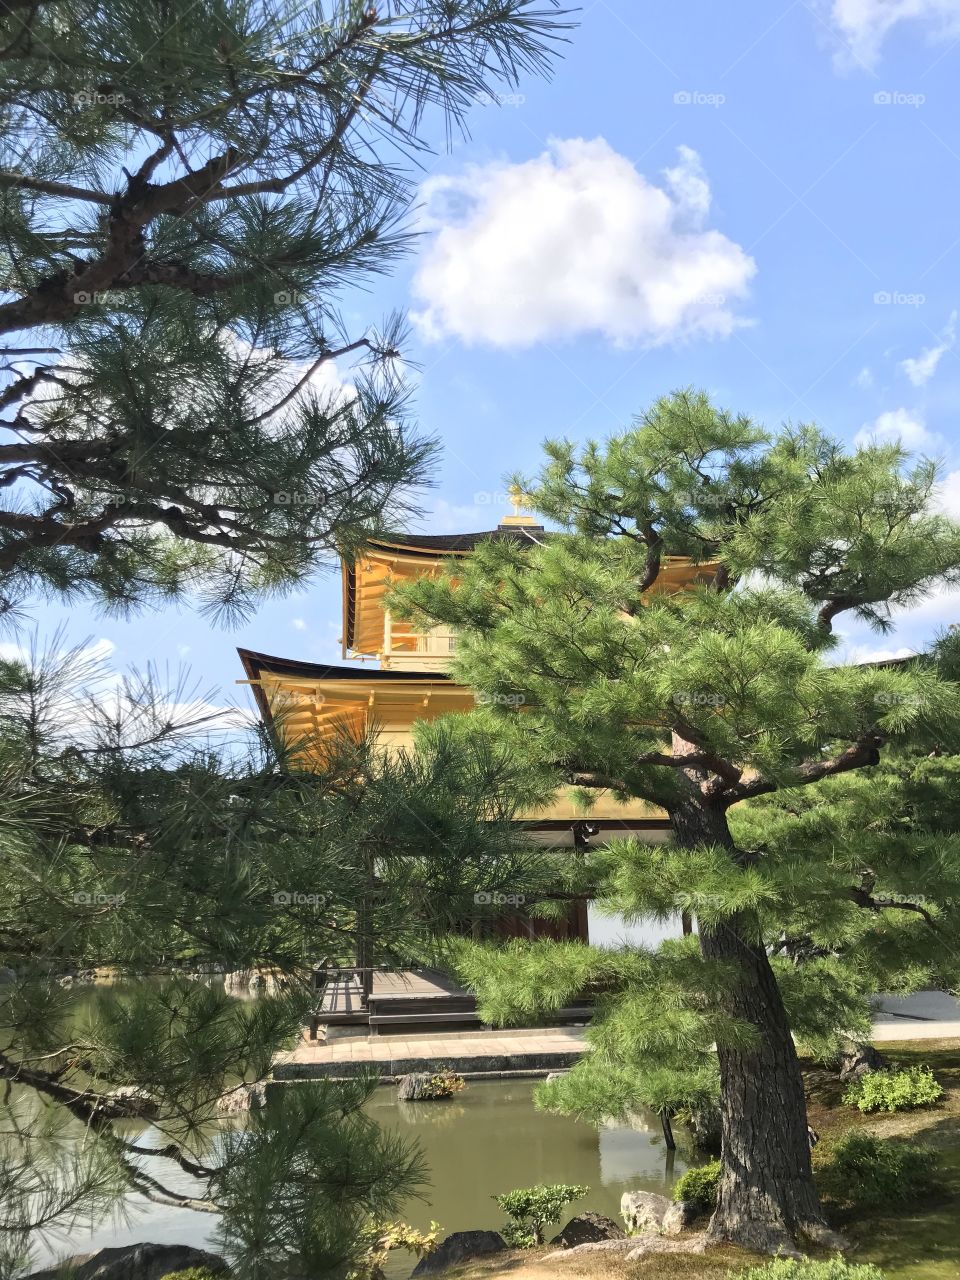 Kyoto#Giappone#Japan#TempioD’Oro#